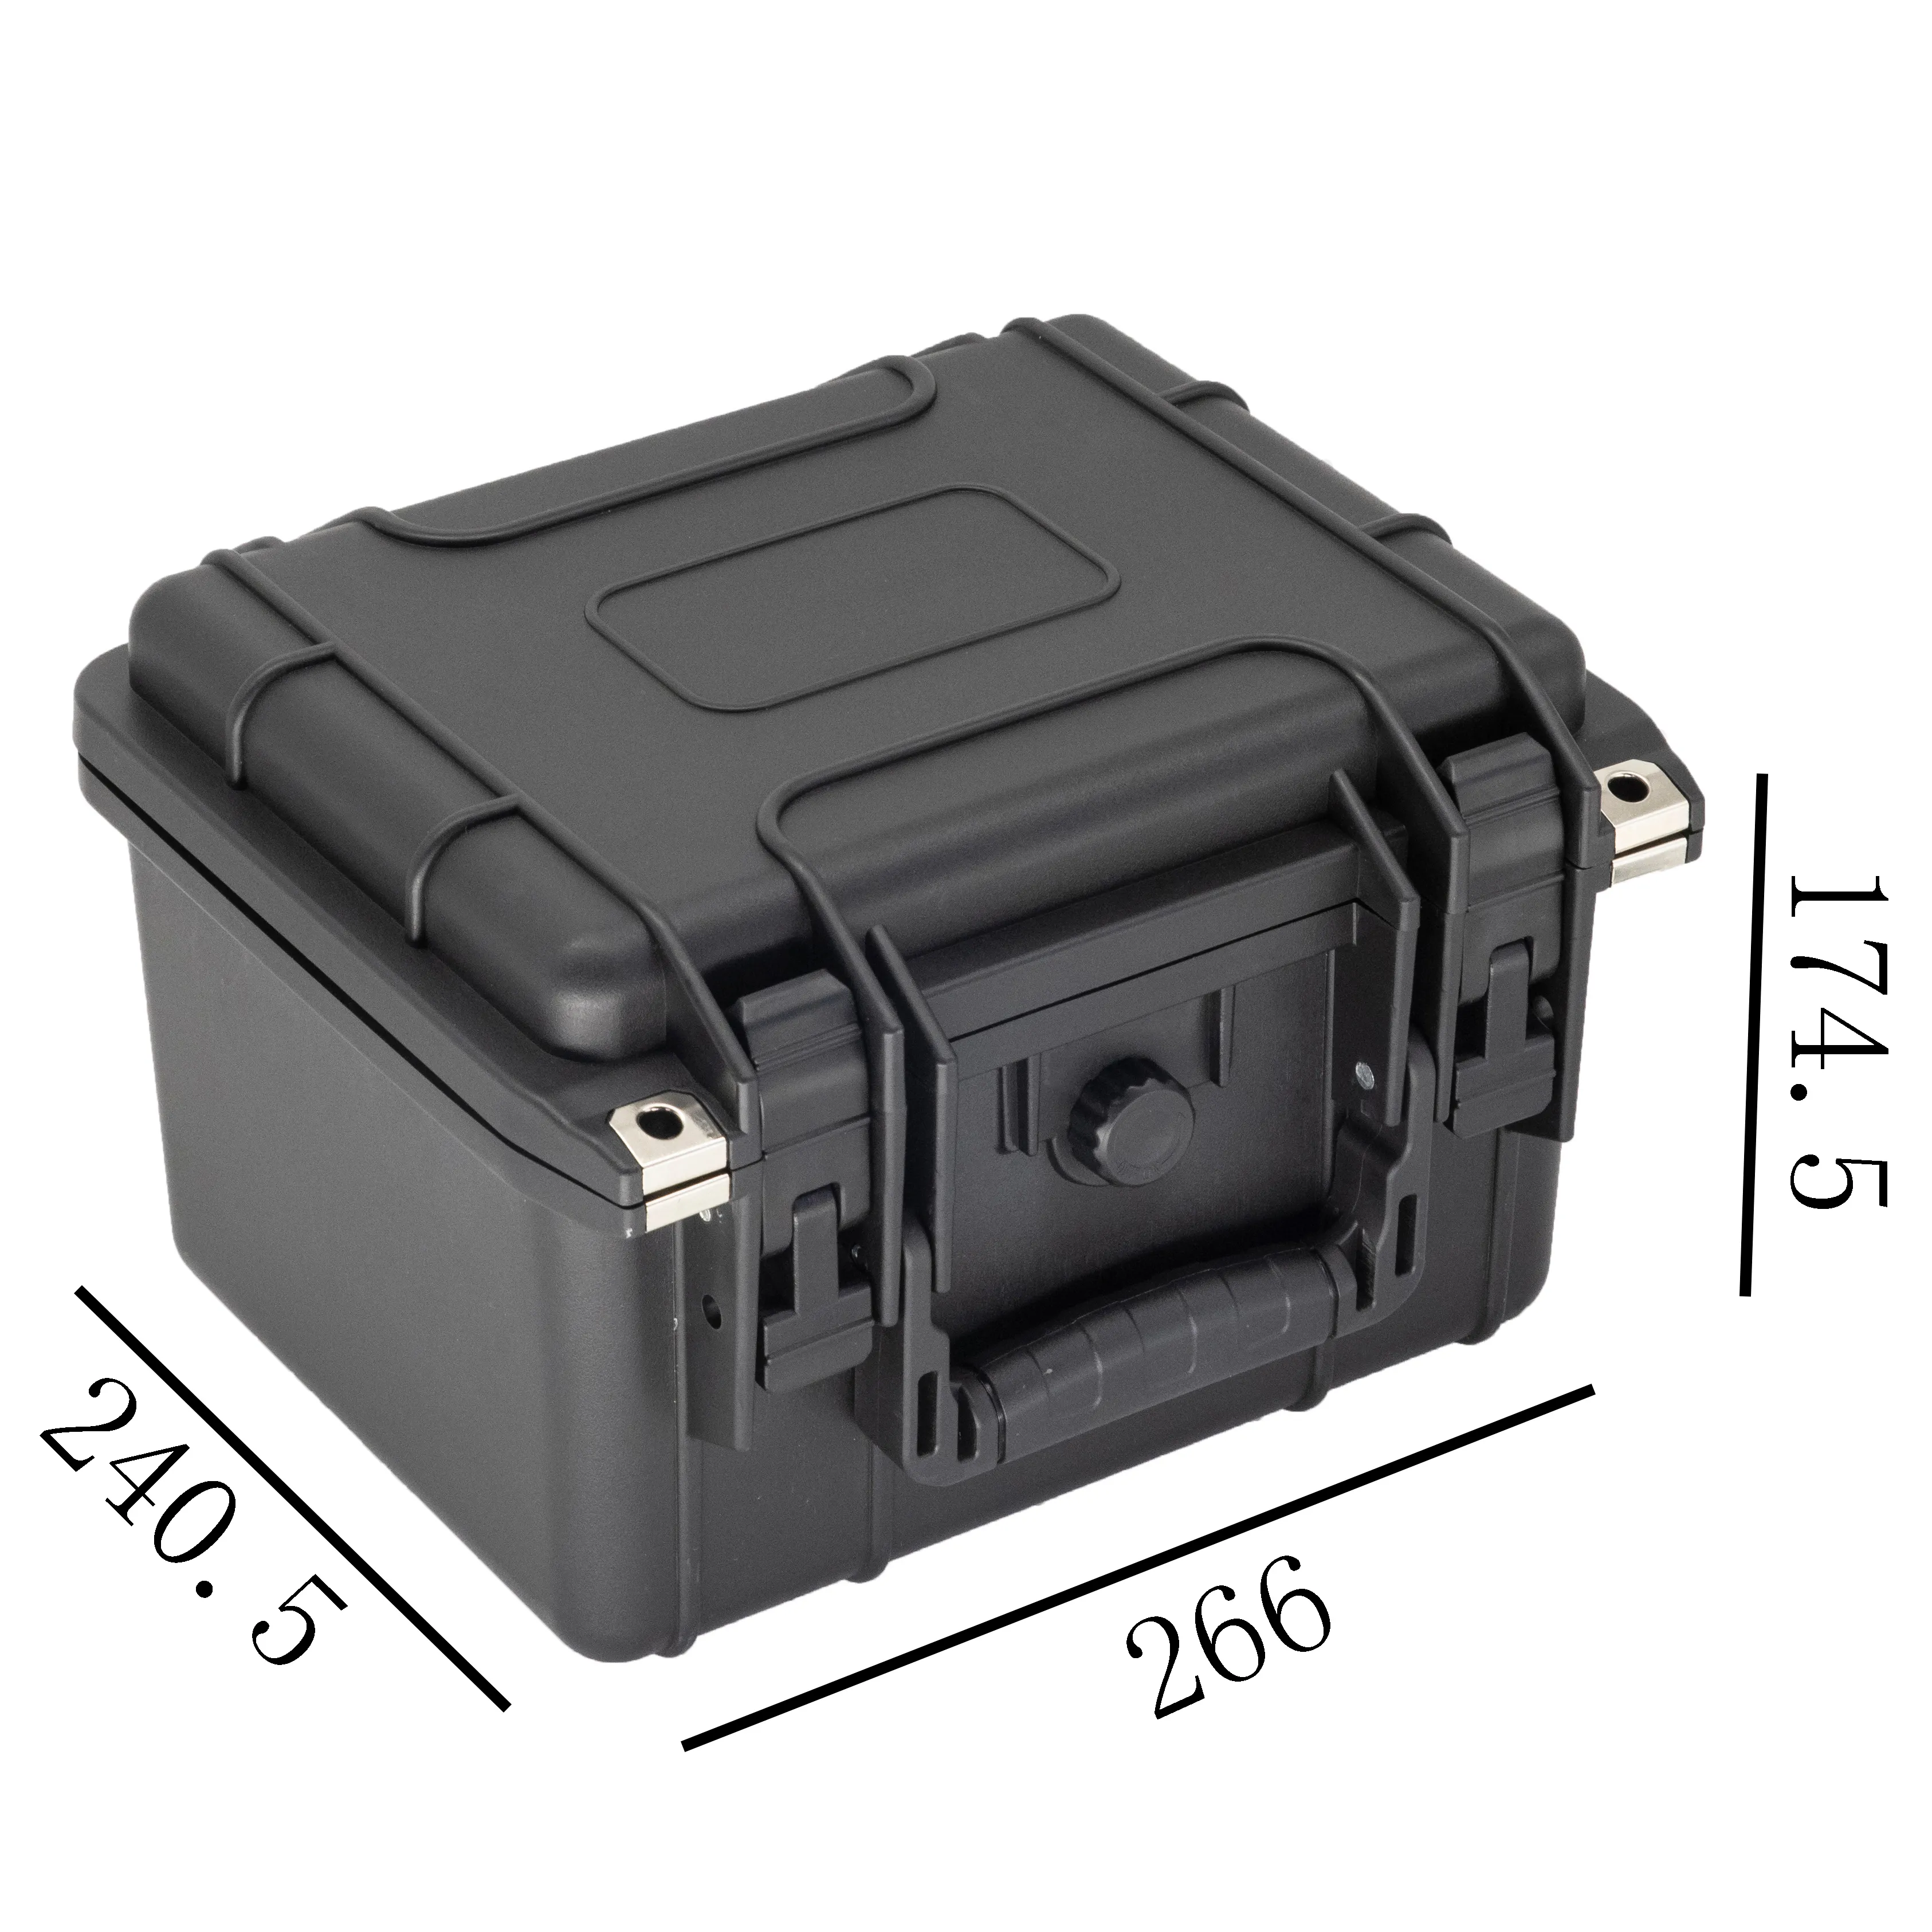 WS5003-10Hカスタムサイズ工業用カメラケース機器プラスチックツール保護キャリー安全ハードペリカンケース